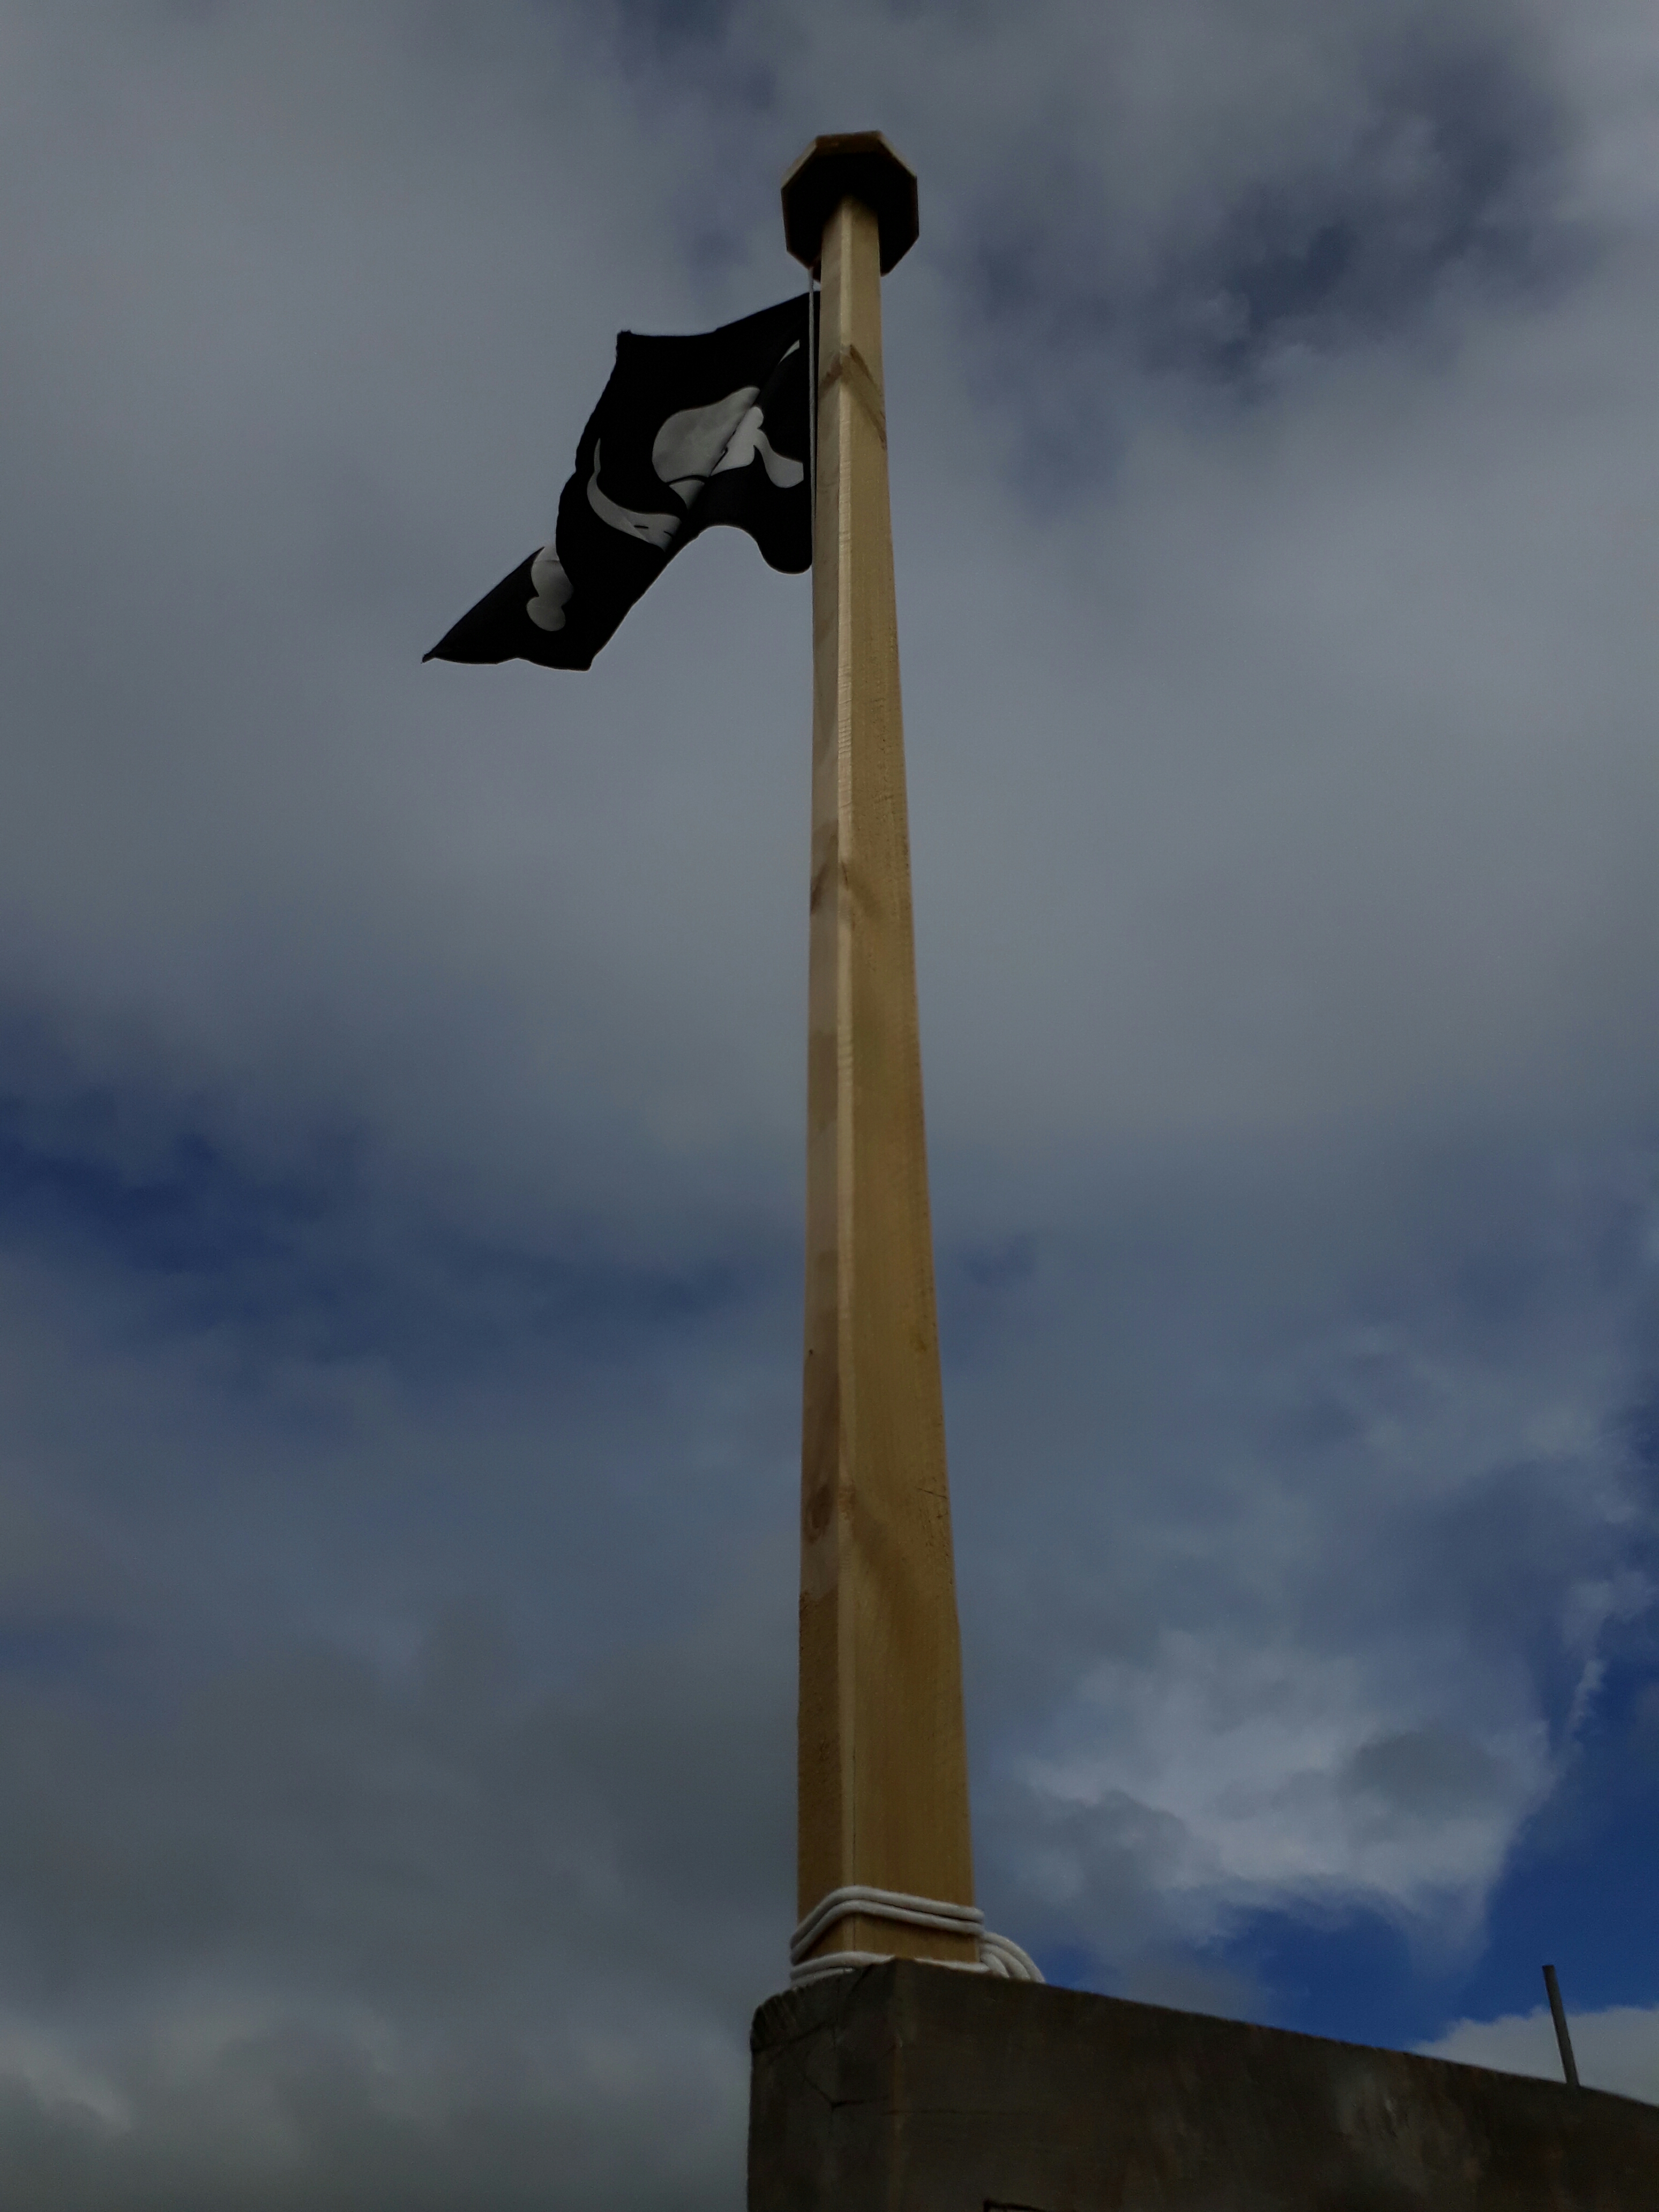 Pirate Flag & Pole Image